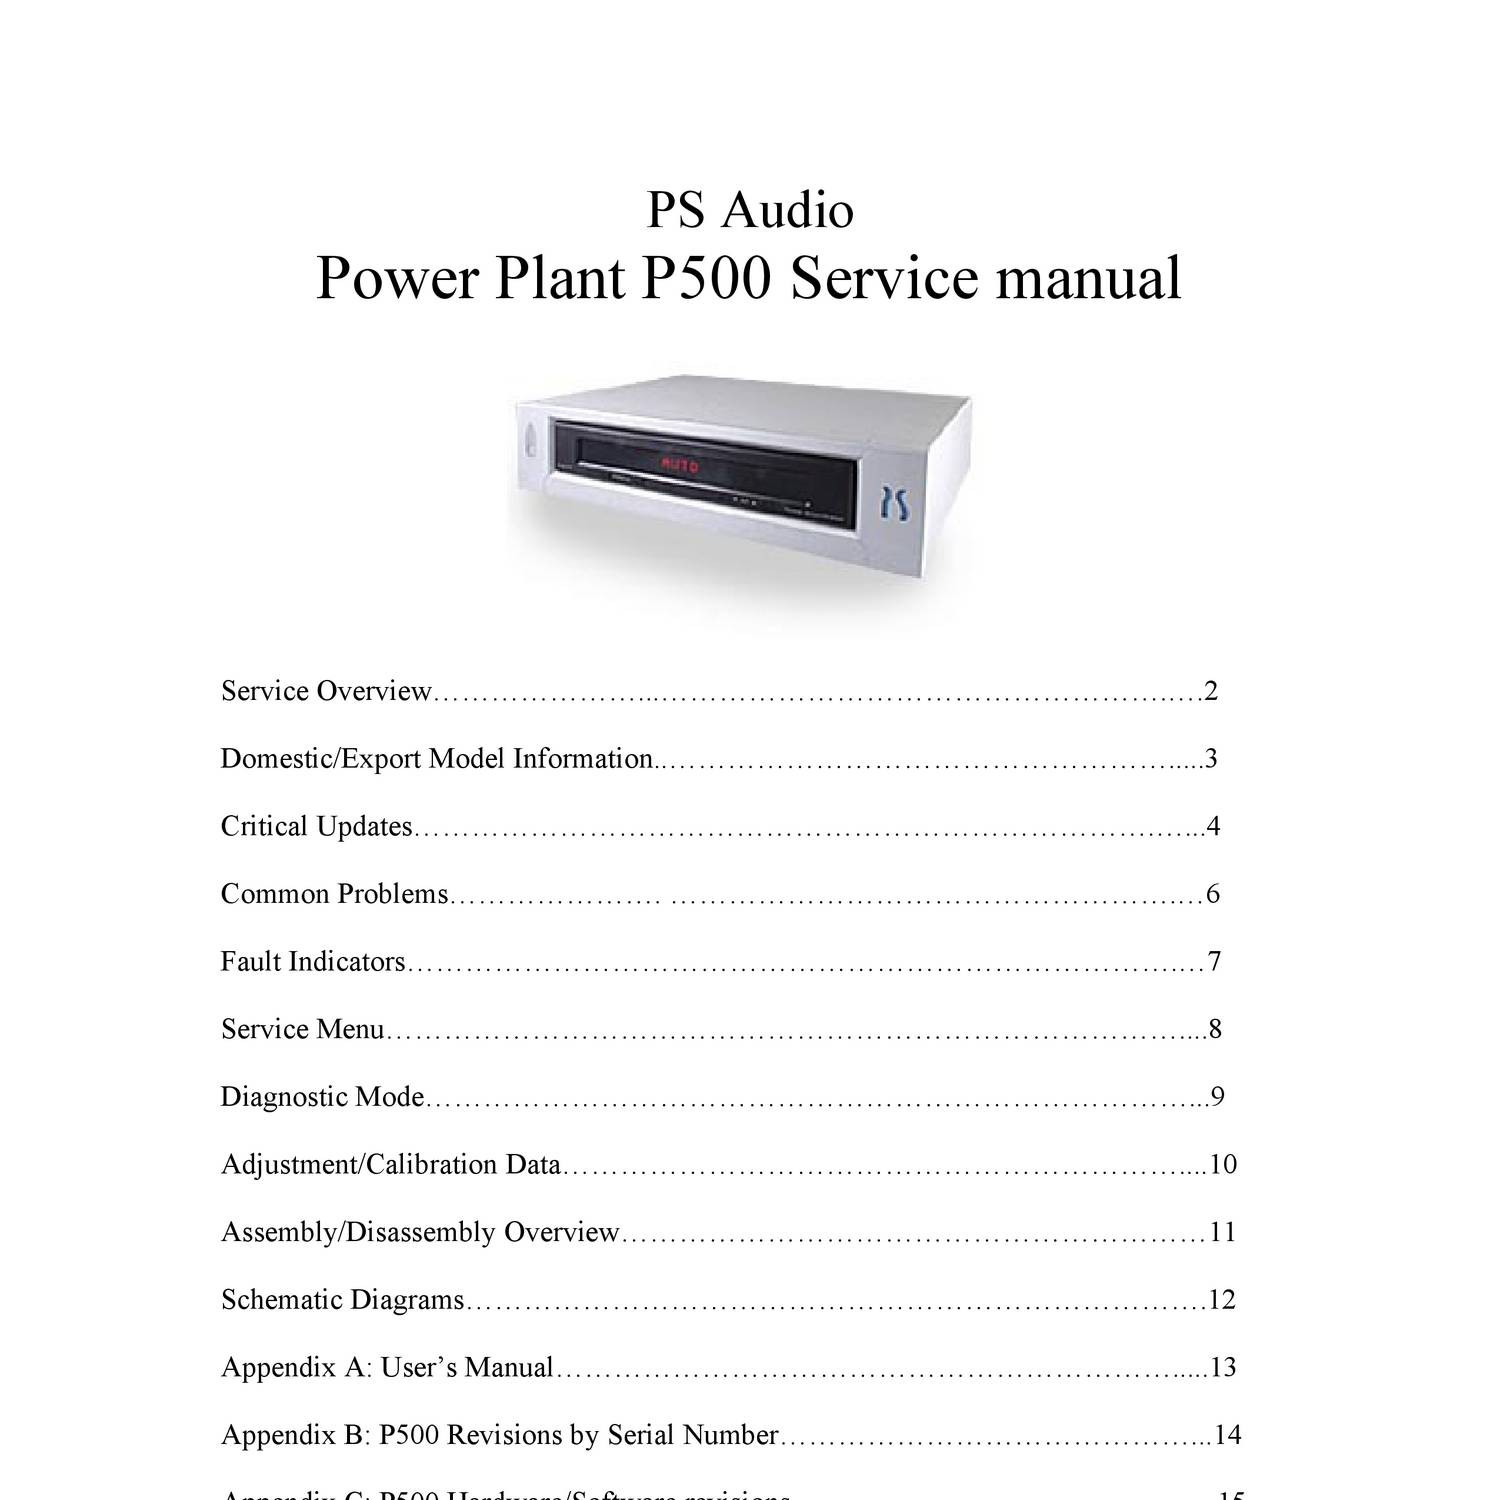 PS Audio Power Plant P500 Service manual.pdf | DocDroid